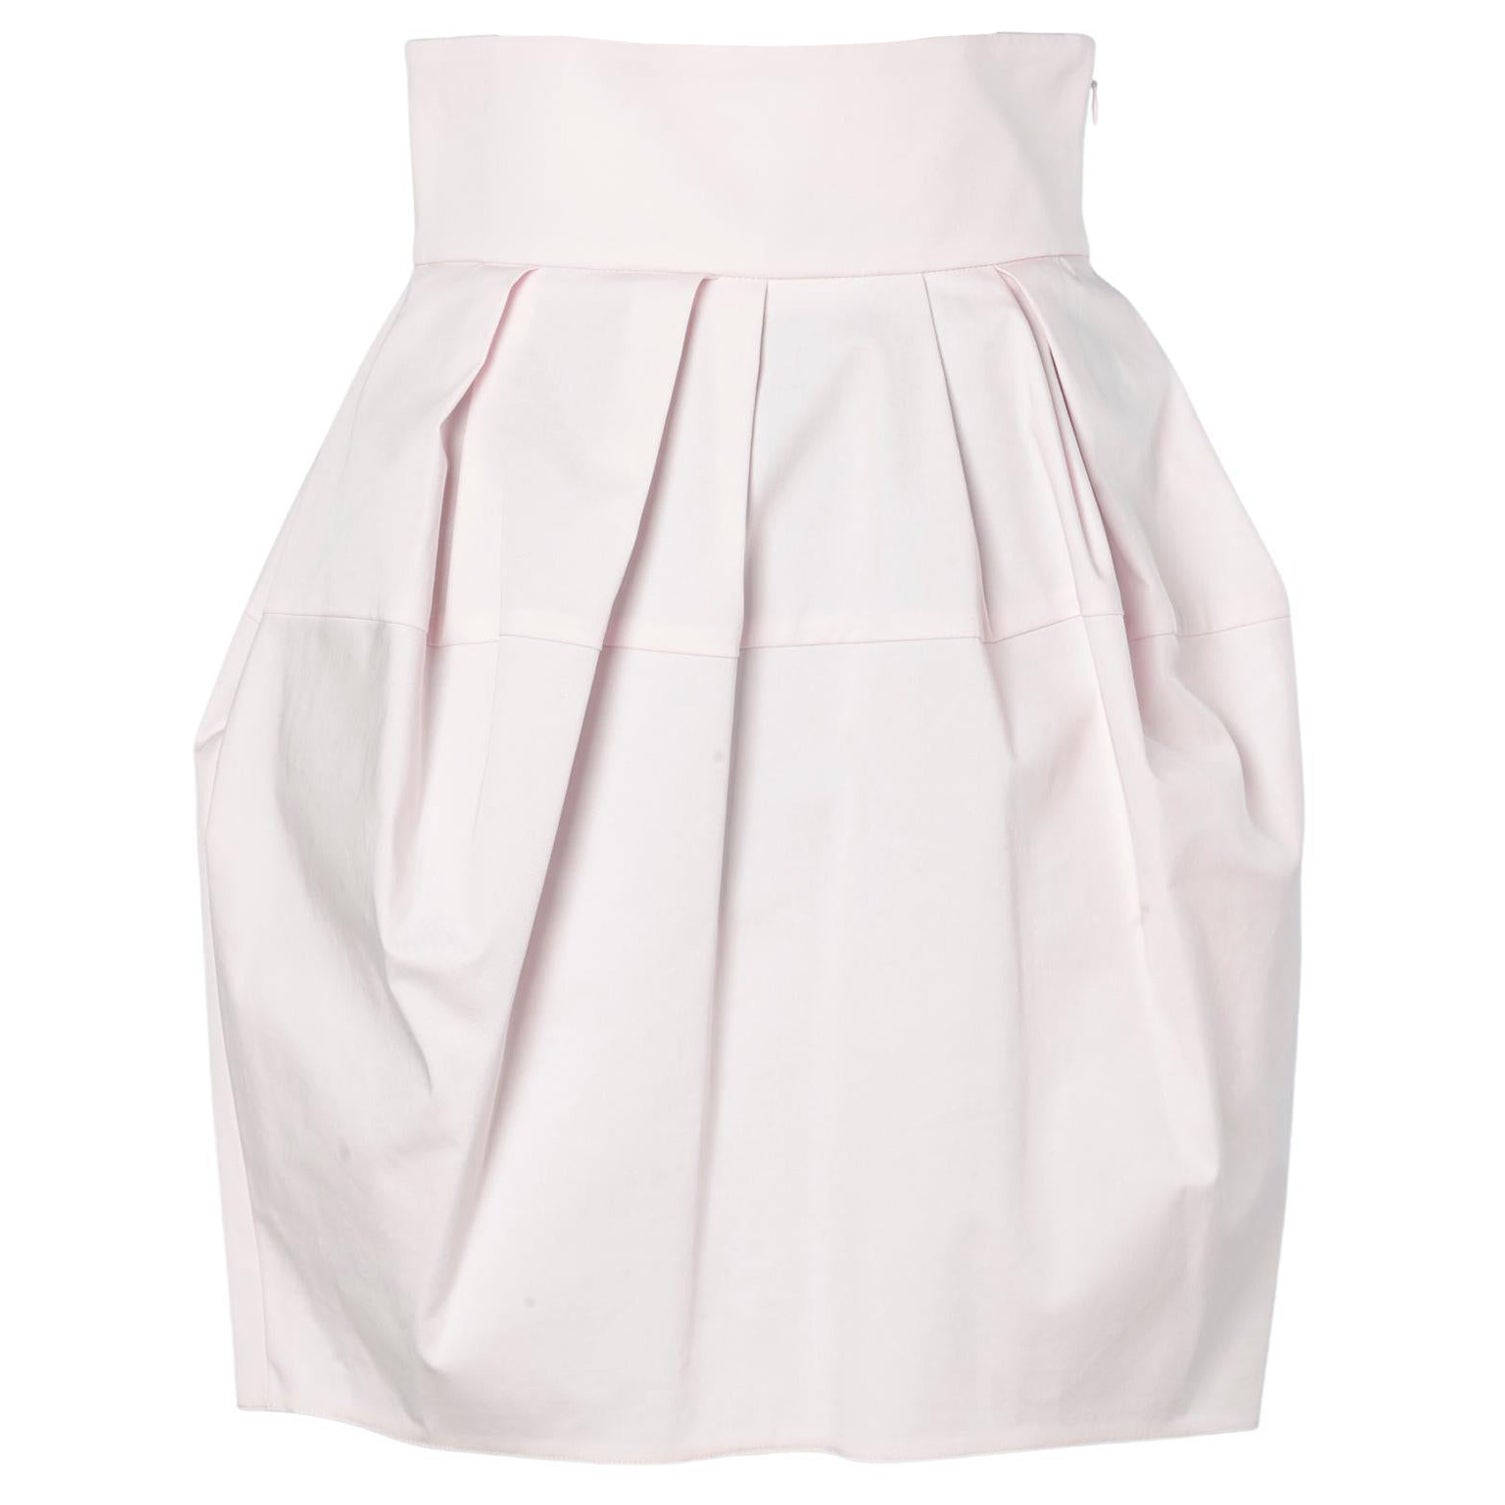 Pale pink tulip cotton skirt Christian Dior 